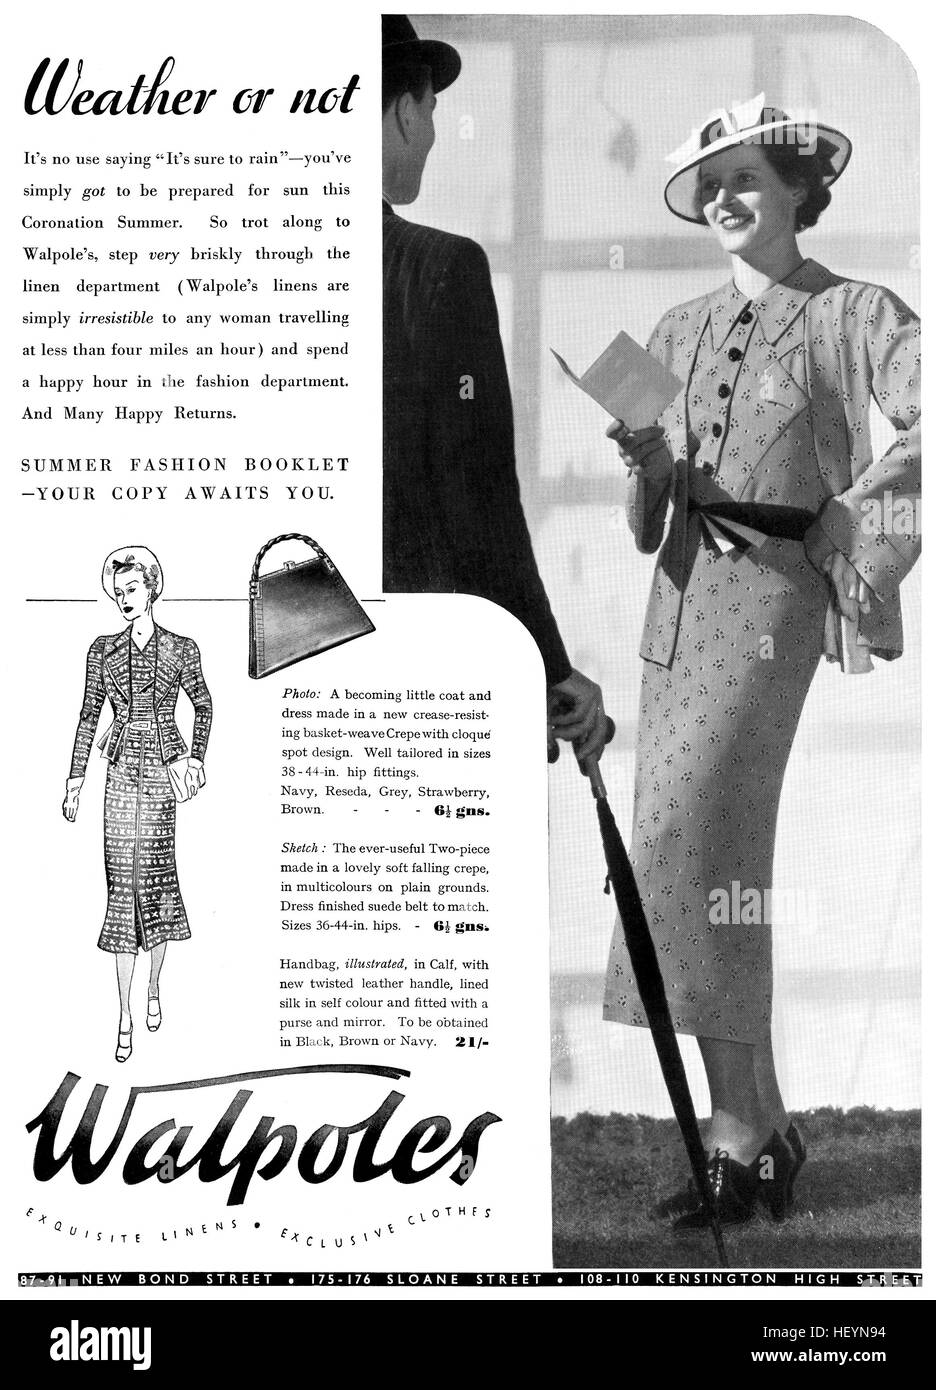 1937 British pubblicità per Walpoles Store, New Bond Street, Londra Foto Stock